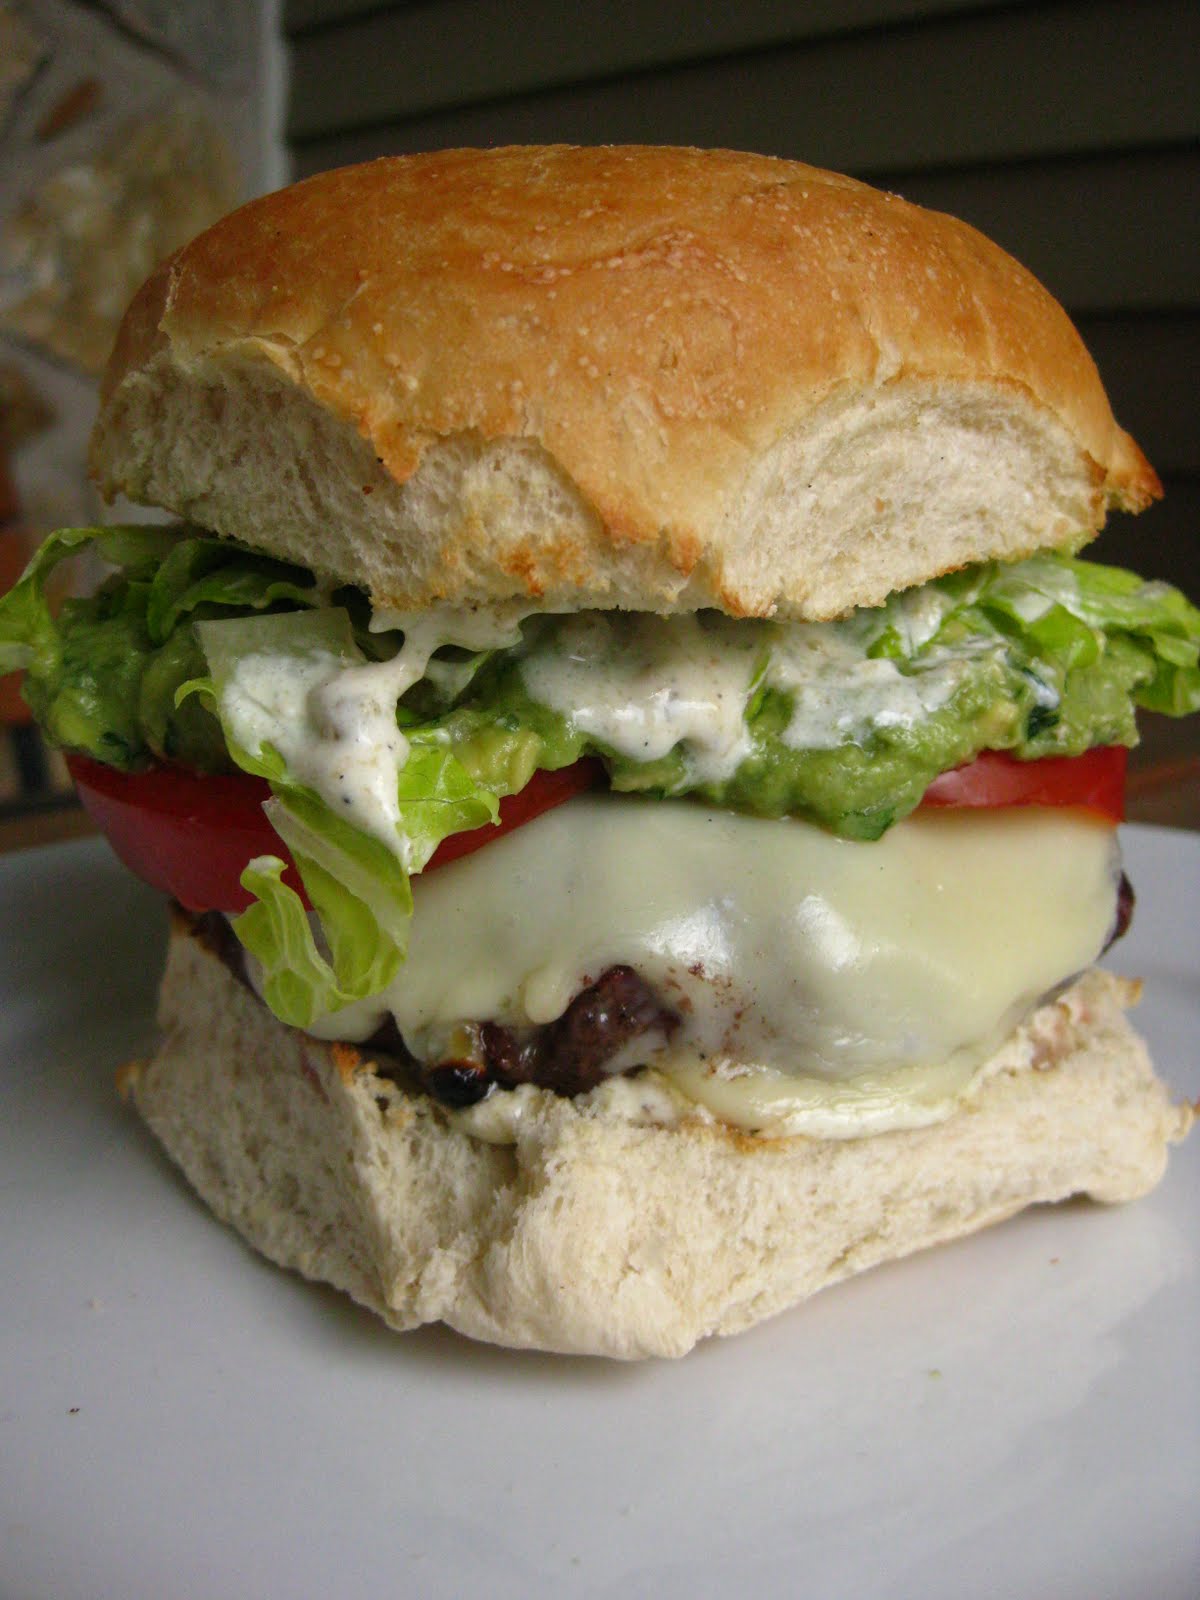 A Taste of Home Cooking: Burger Friday - Guacamole Burger